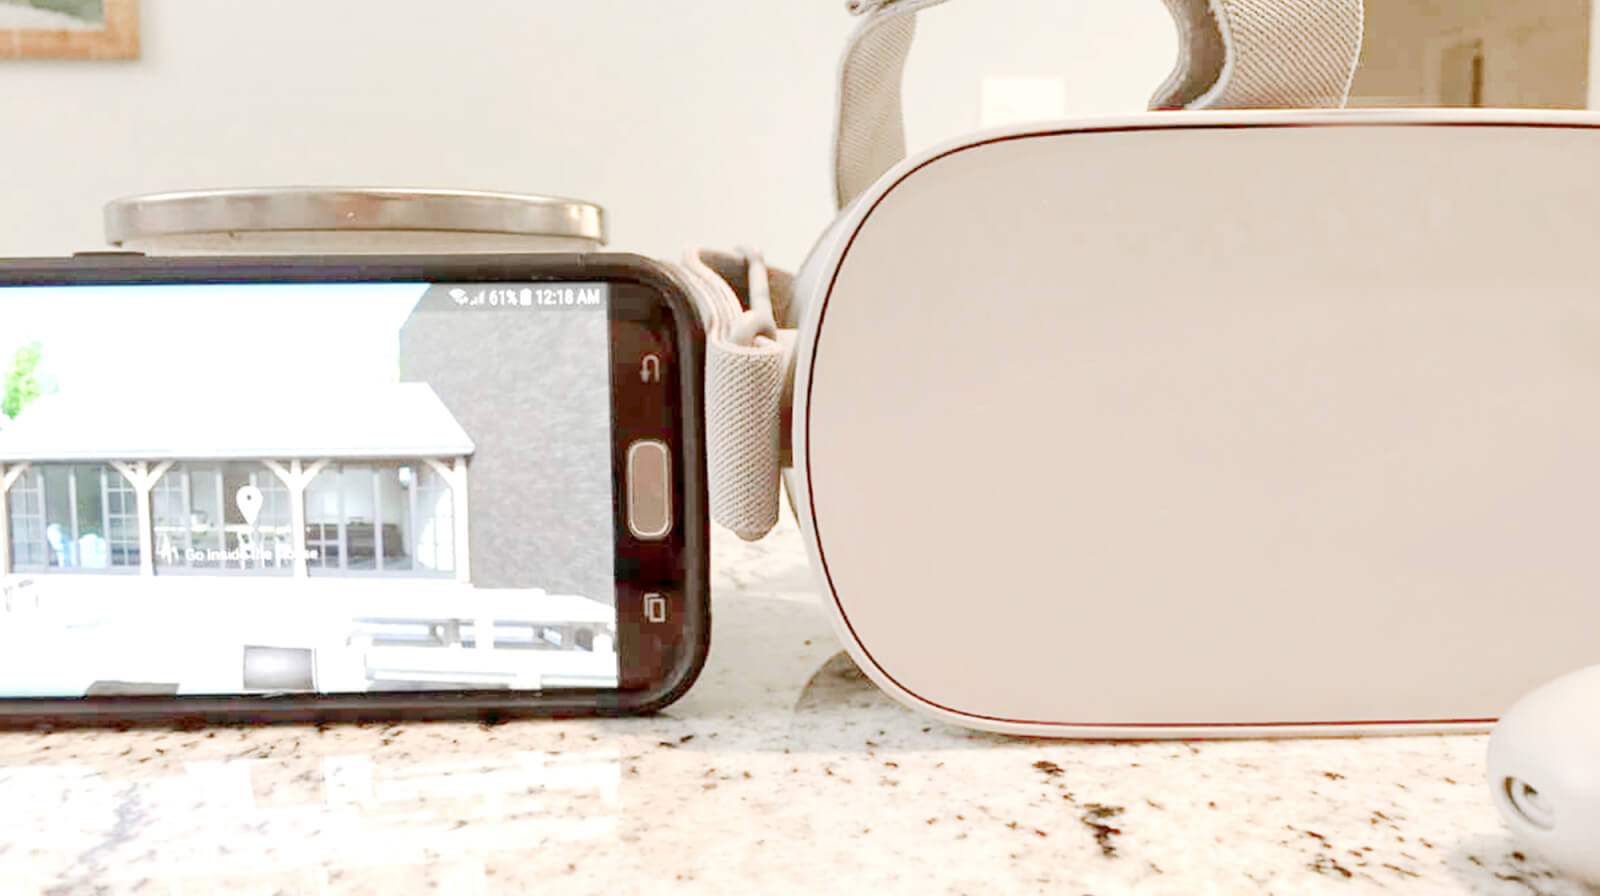 oculus go cast to phone